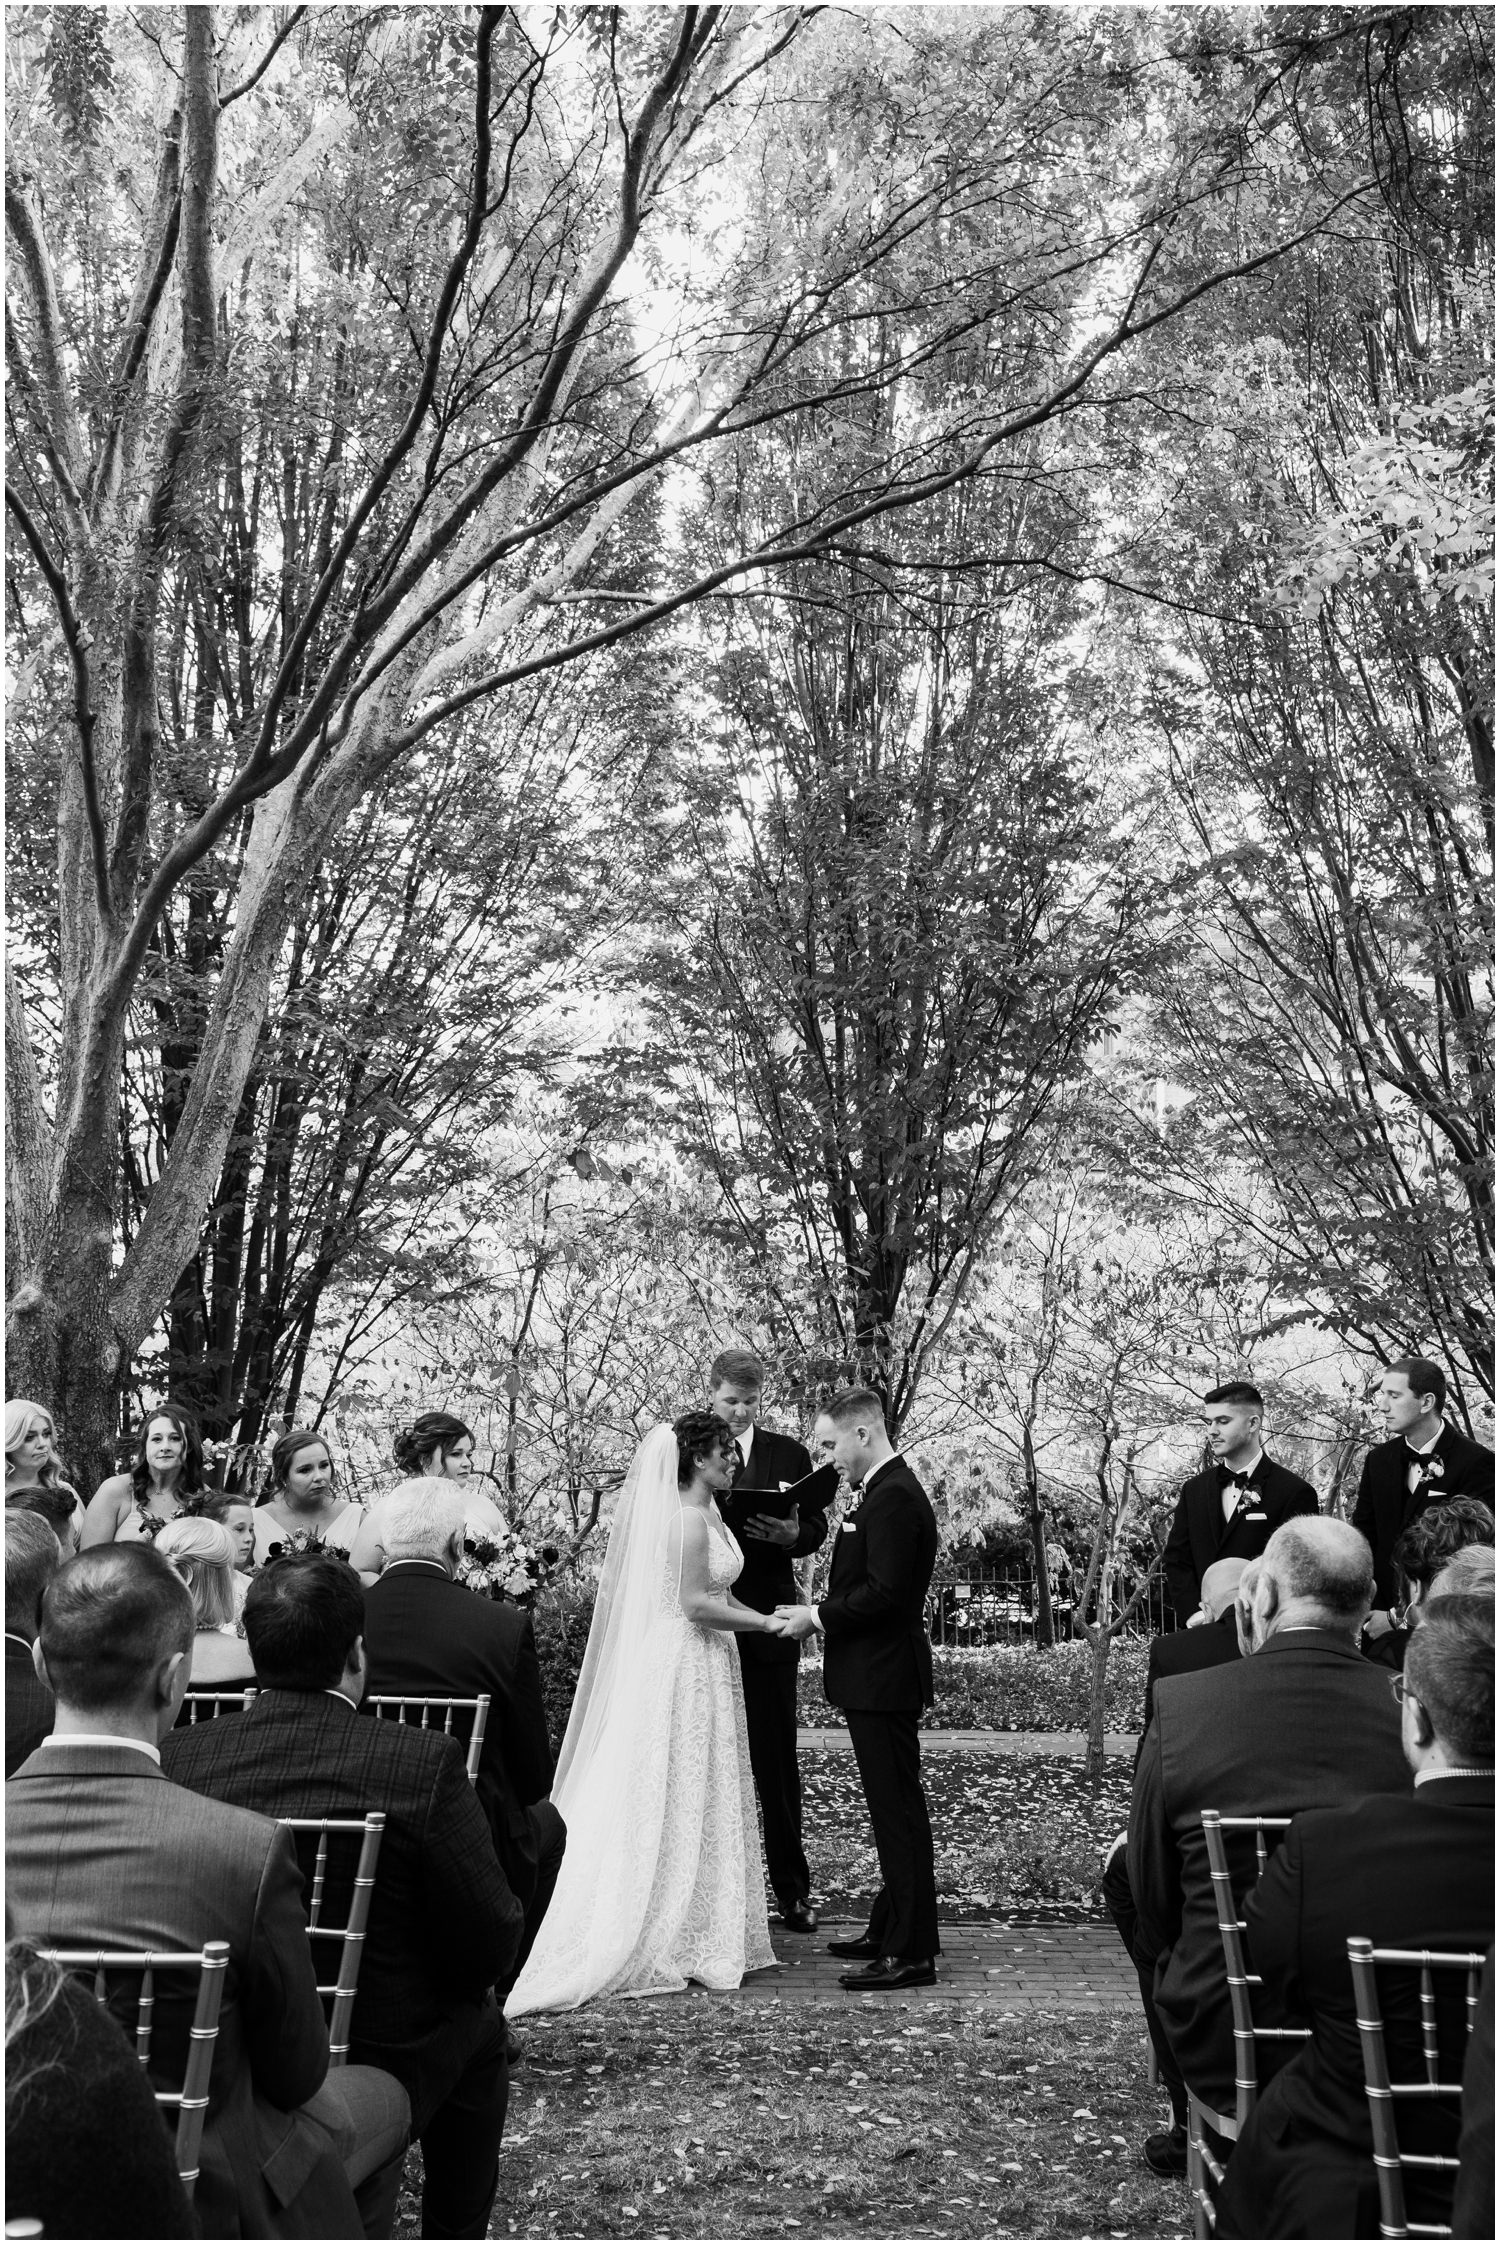 Adam Lowe Photography, Cincinnati, Ohio, based in Columbus Ohio, editorial, wedding, photographer, love, style, taft art museum, classic wedding